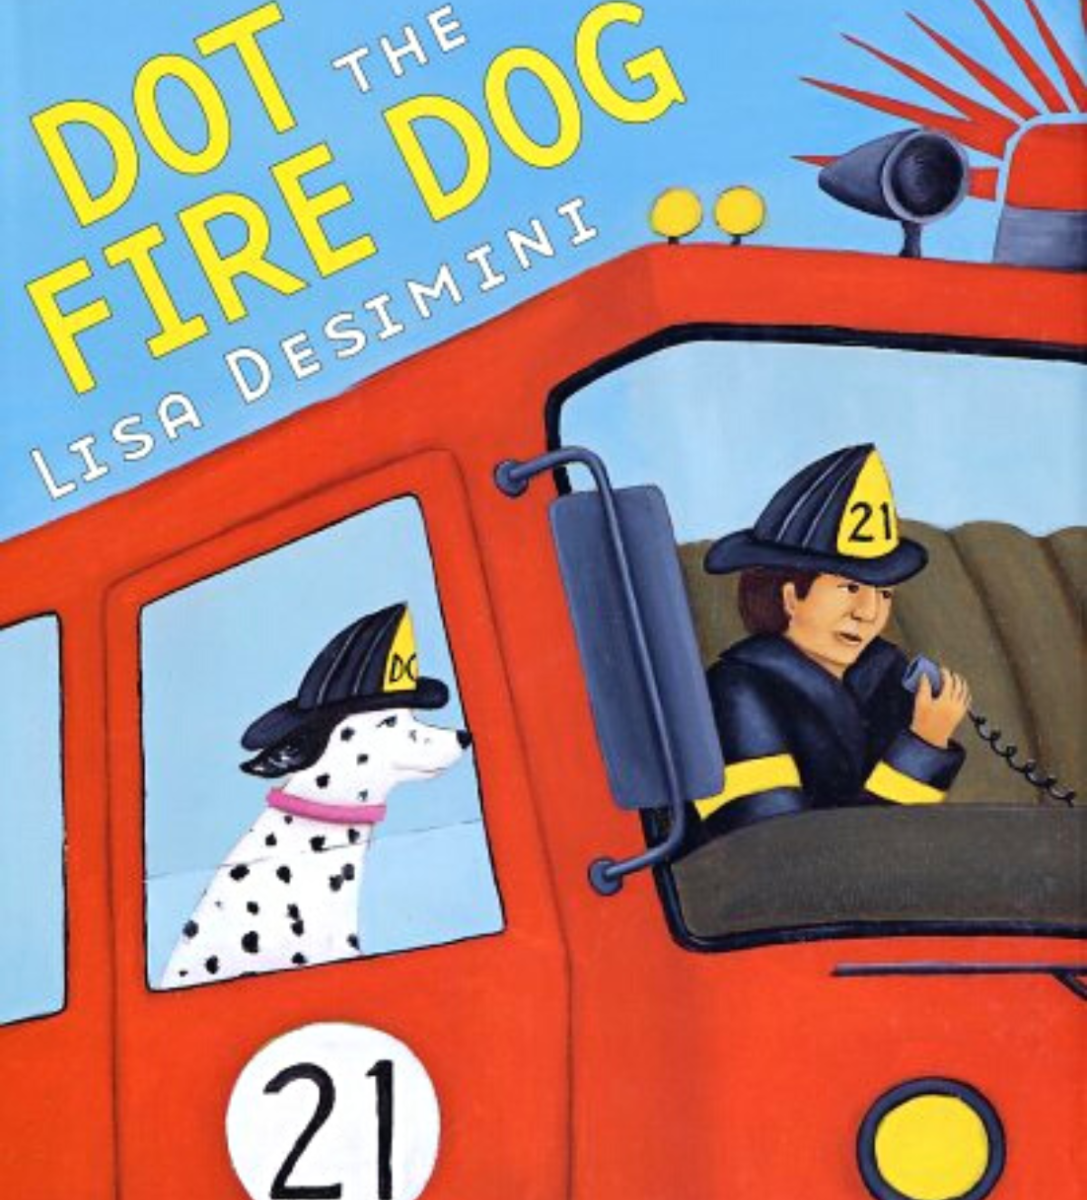 Dot the Fire Dog by Lisa Desimini